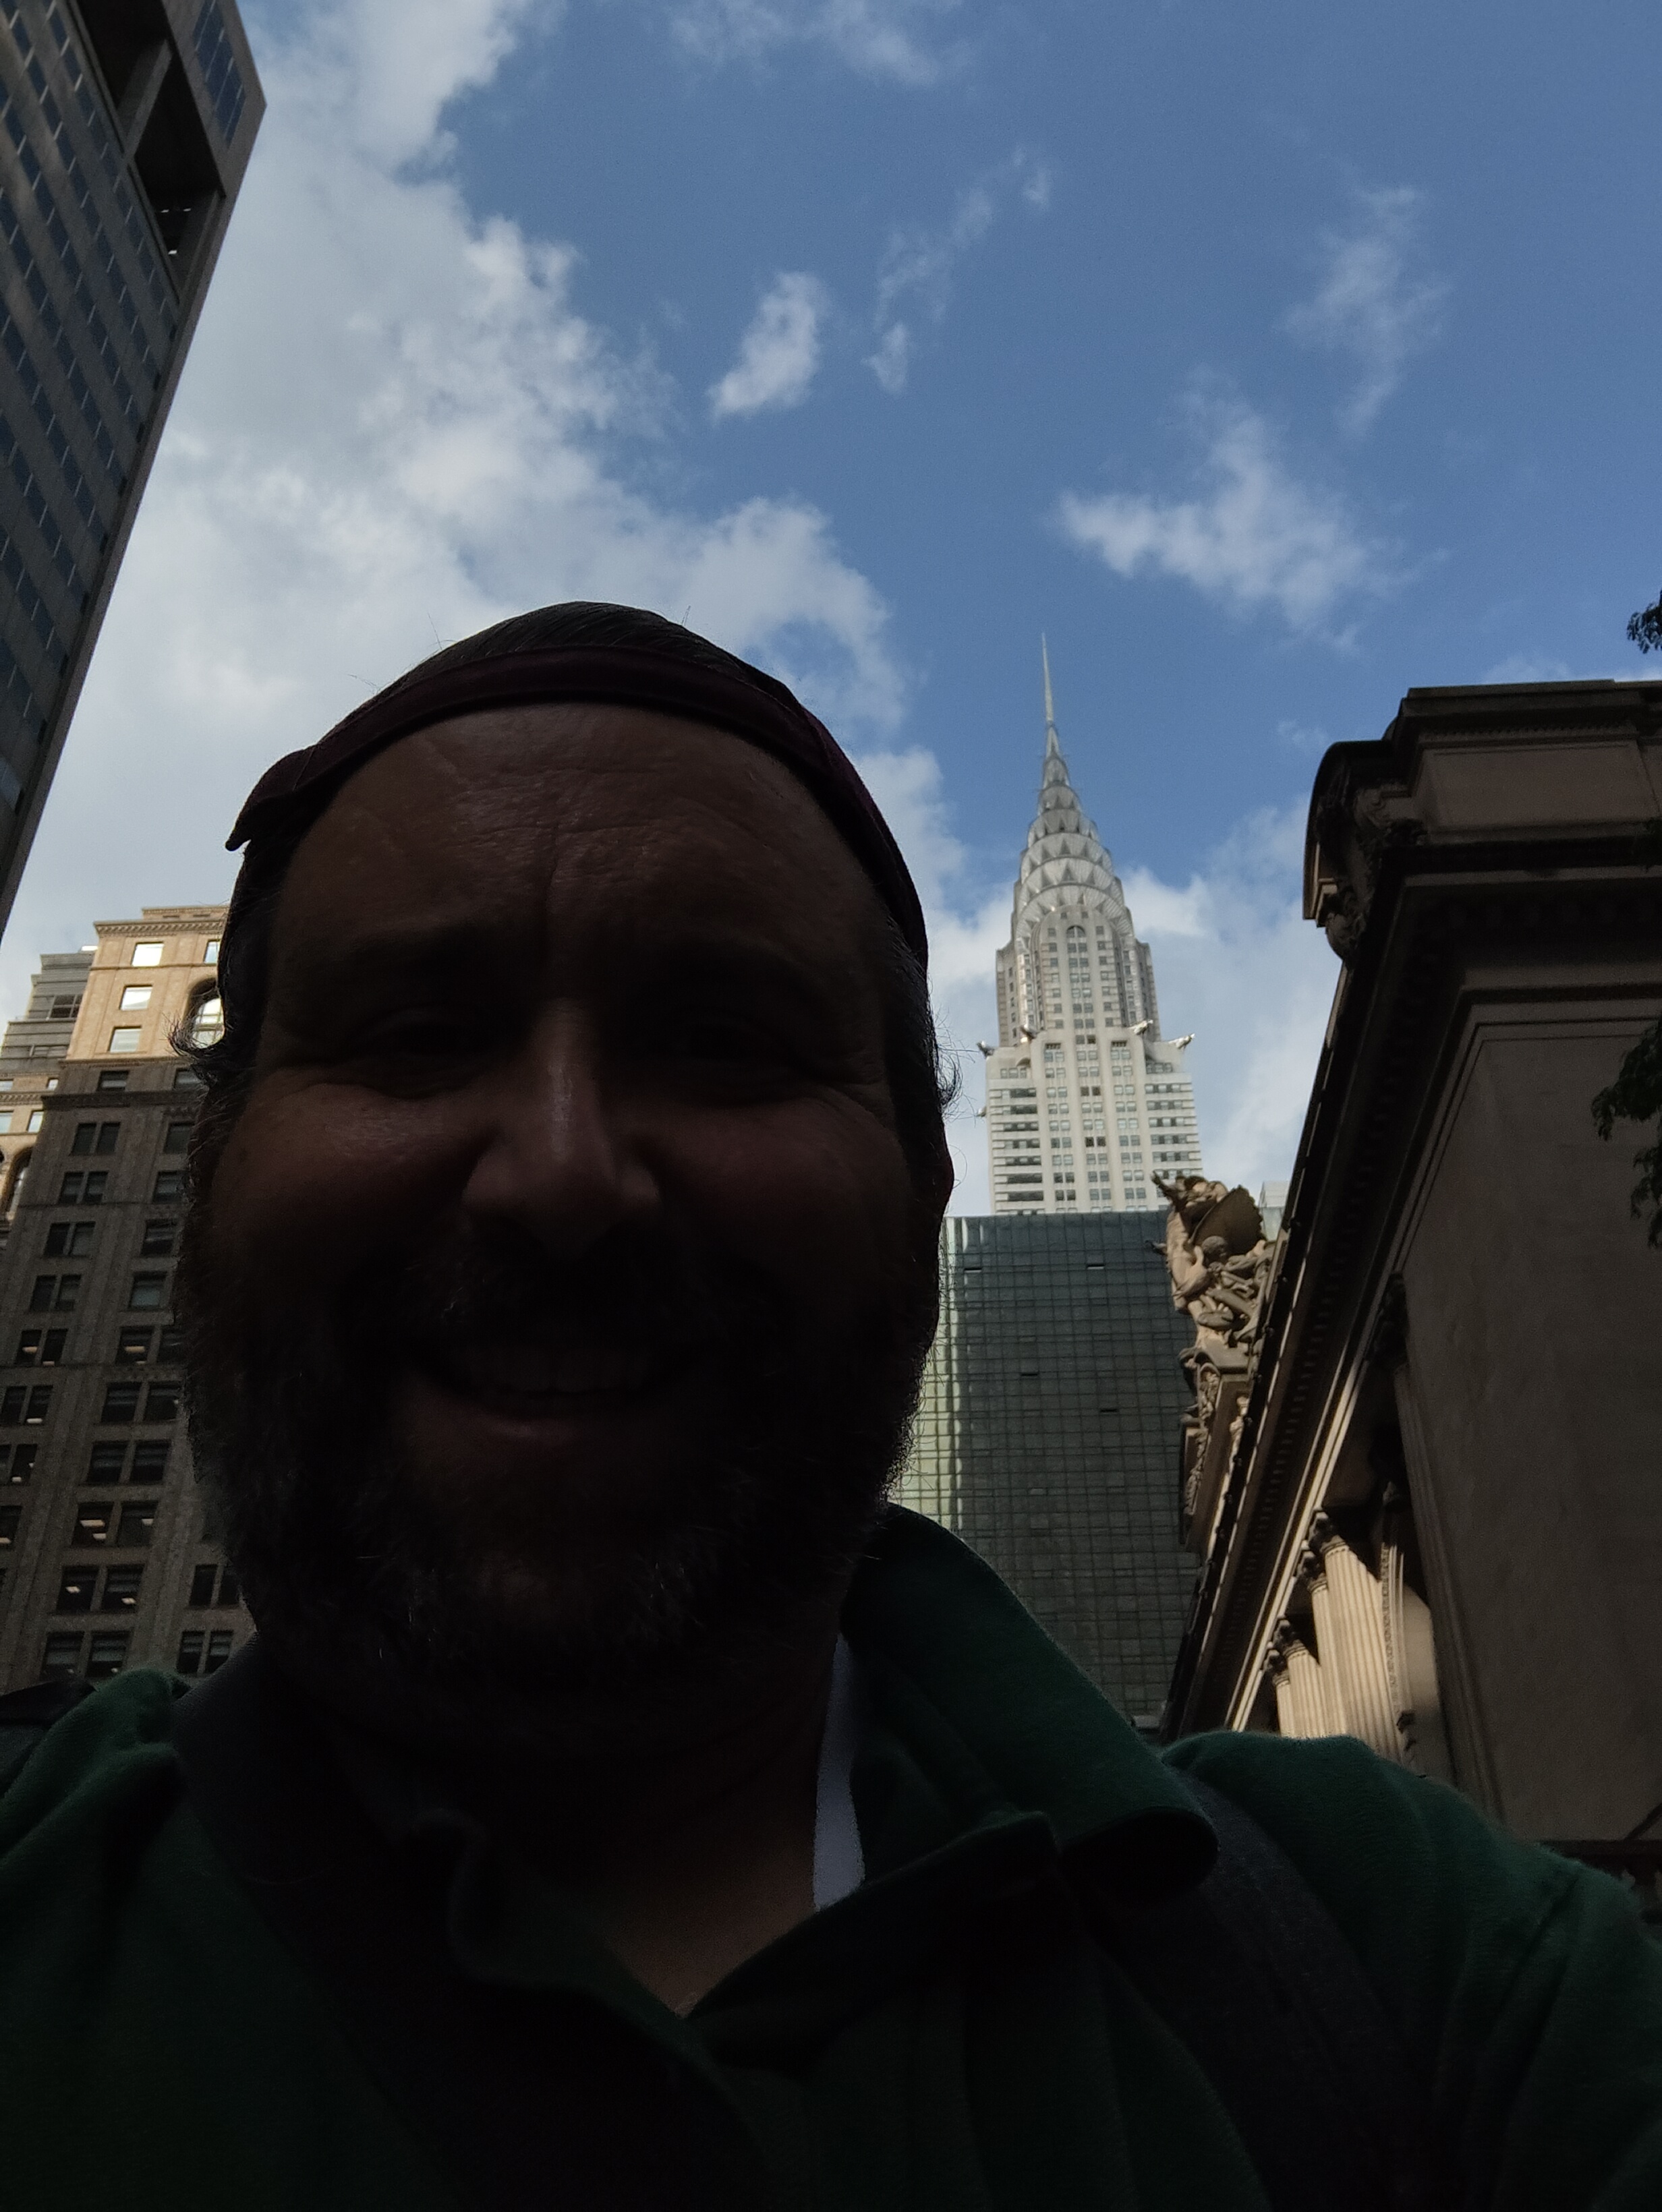 Nothing Phone 2 camera sample selfie with Chrysler building behind